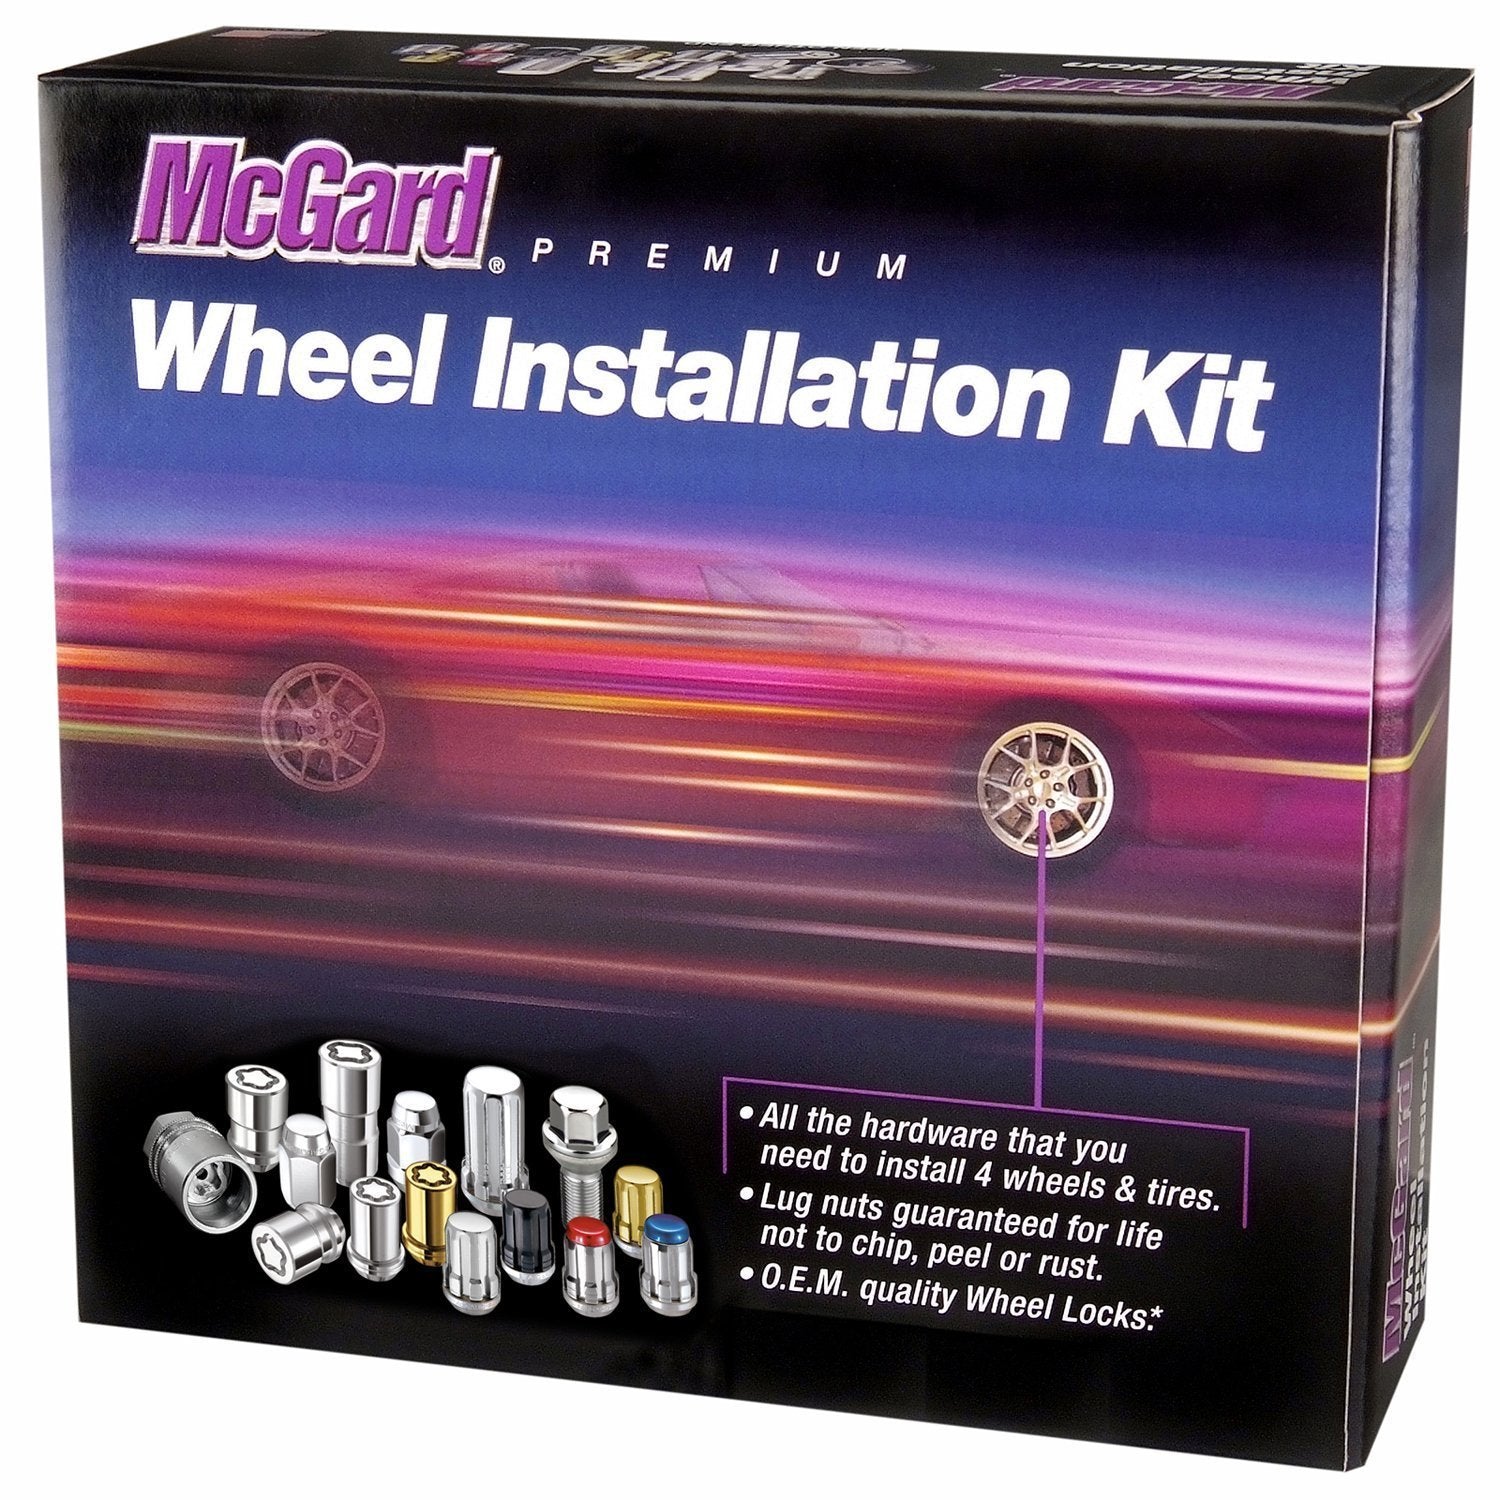 McGard, McGard Cone Seat Exposed Style Wheel Installation Kit / Chrome (84554)